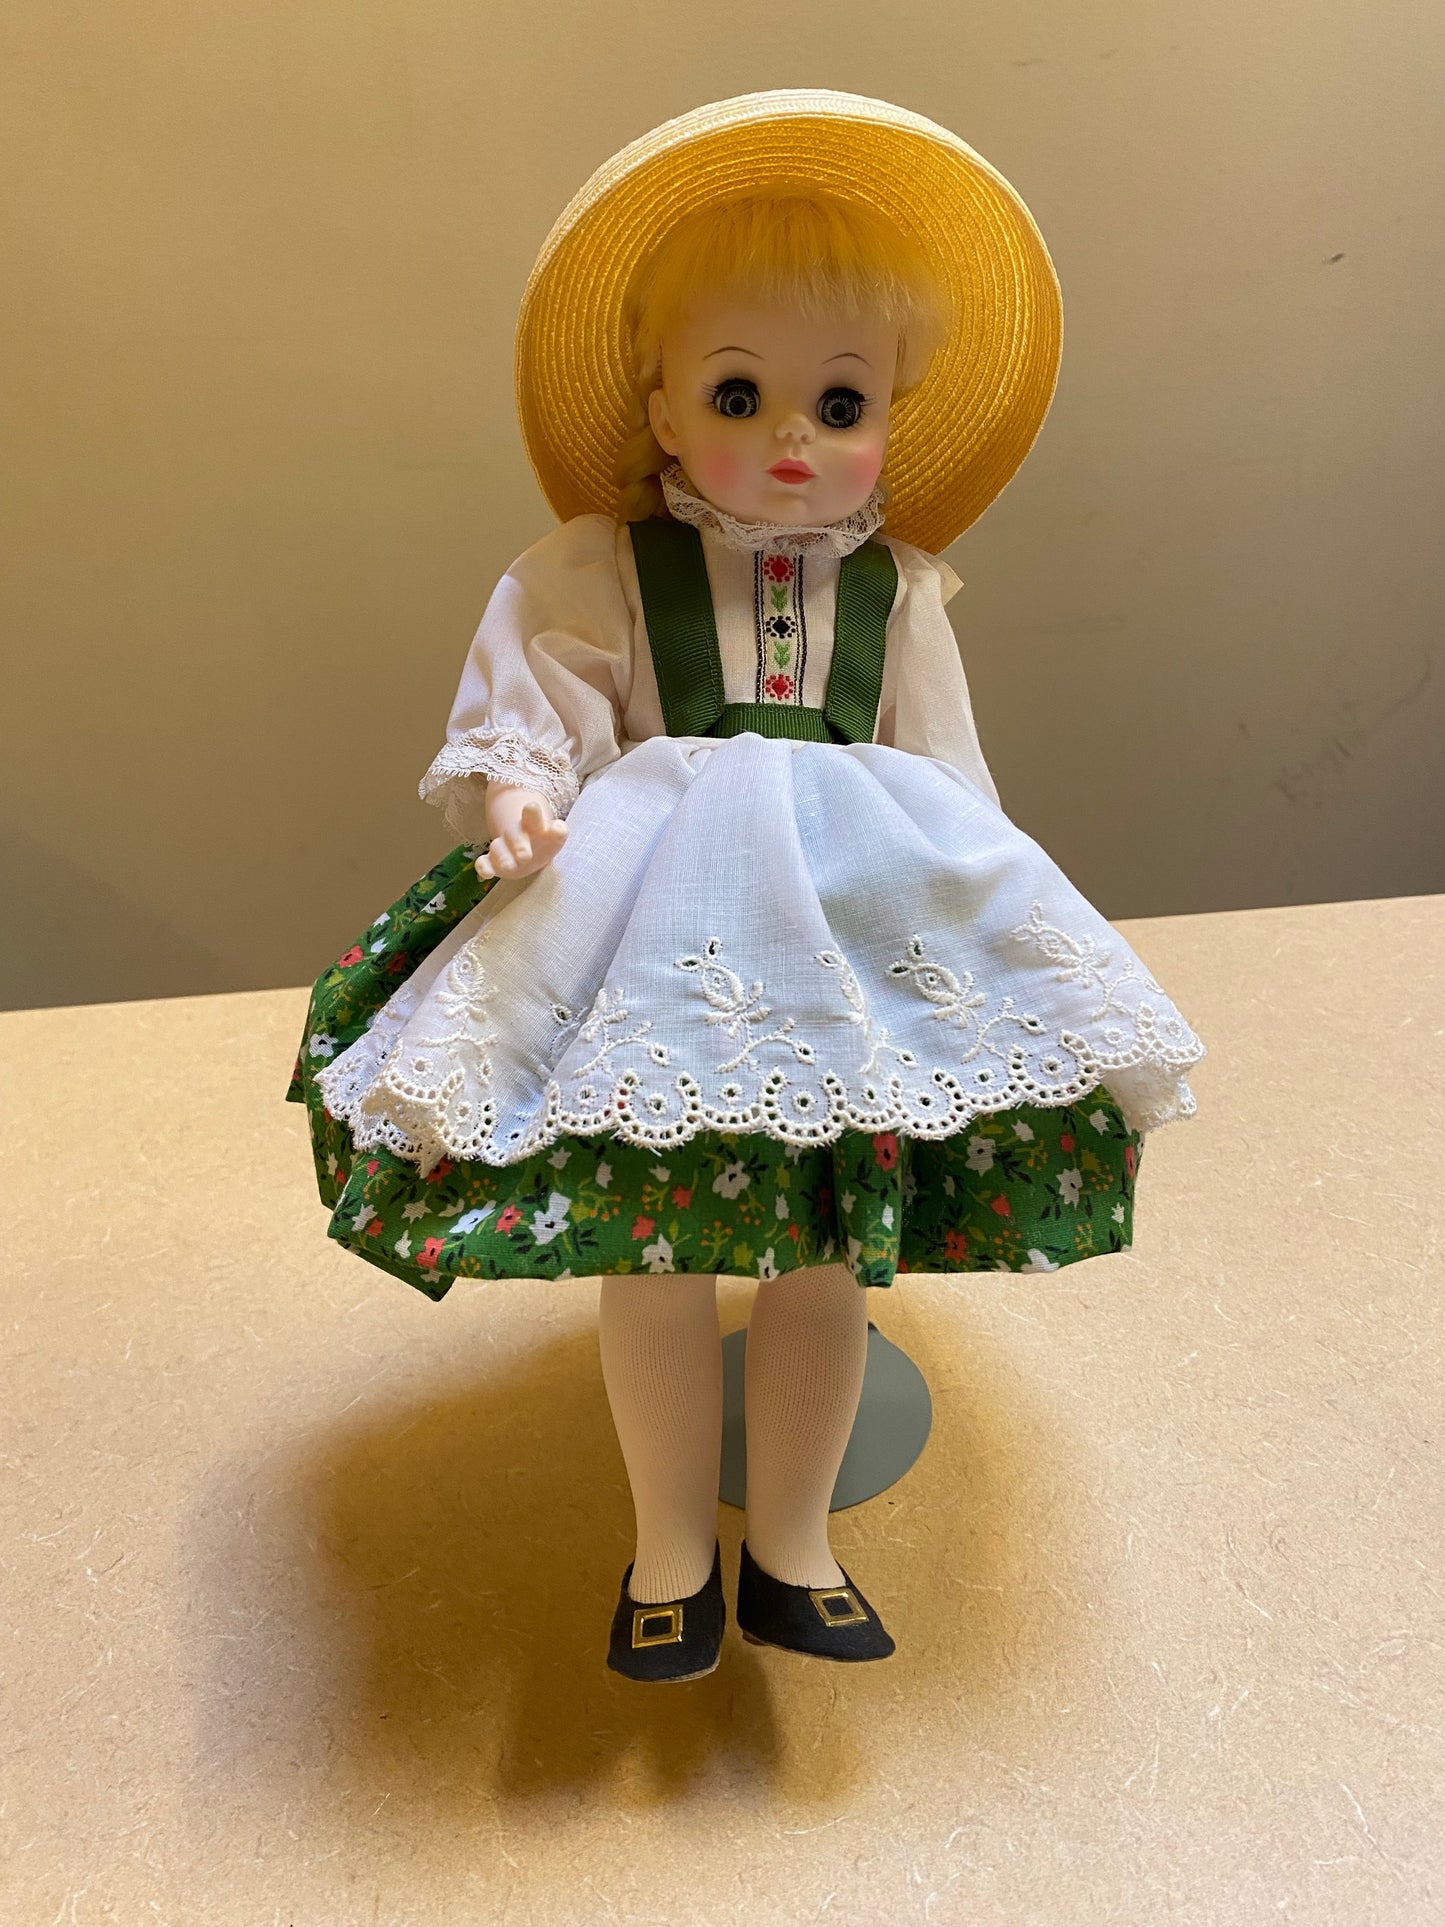 Madame Alexander's "Heidi" Doll